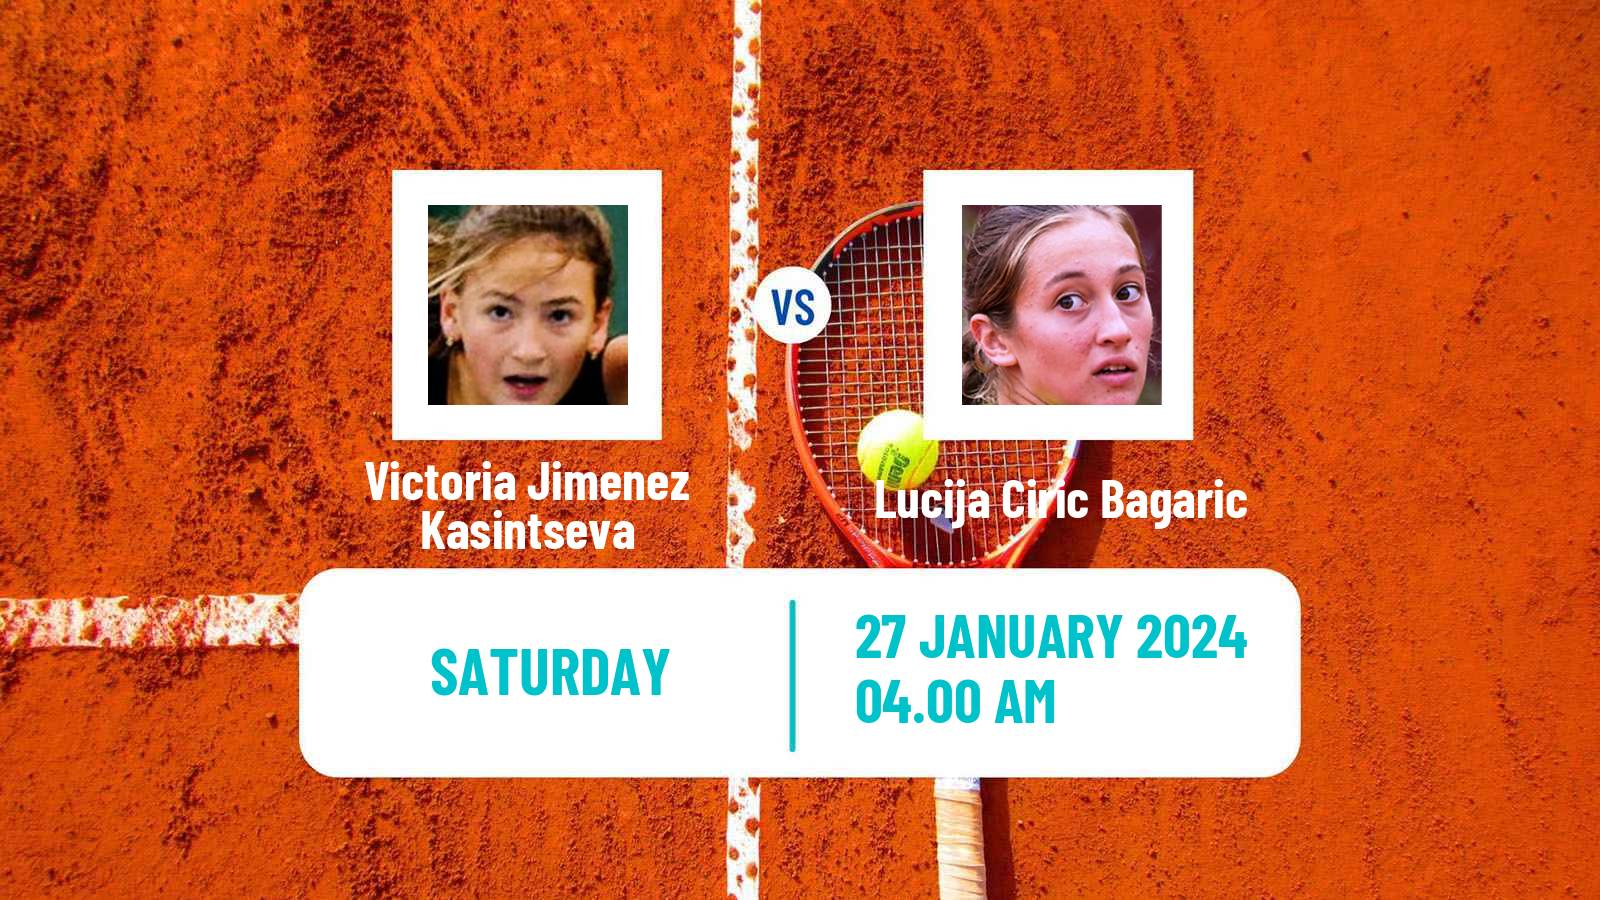 Tennis ITF W35 Monastir 2 Women Victoria Jimenez Kasintseva - Lucija Ciric Bagaric